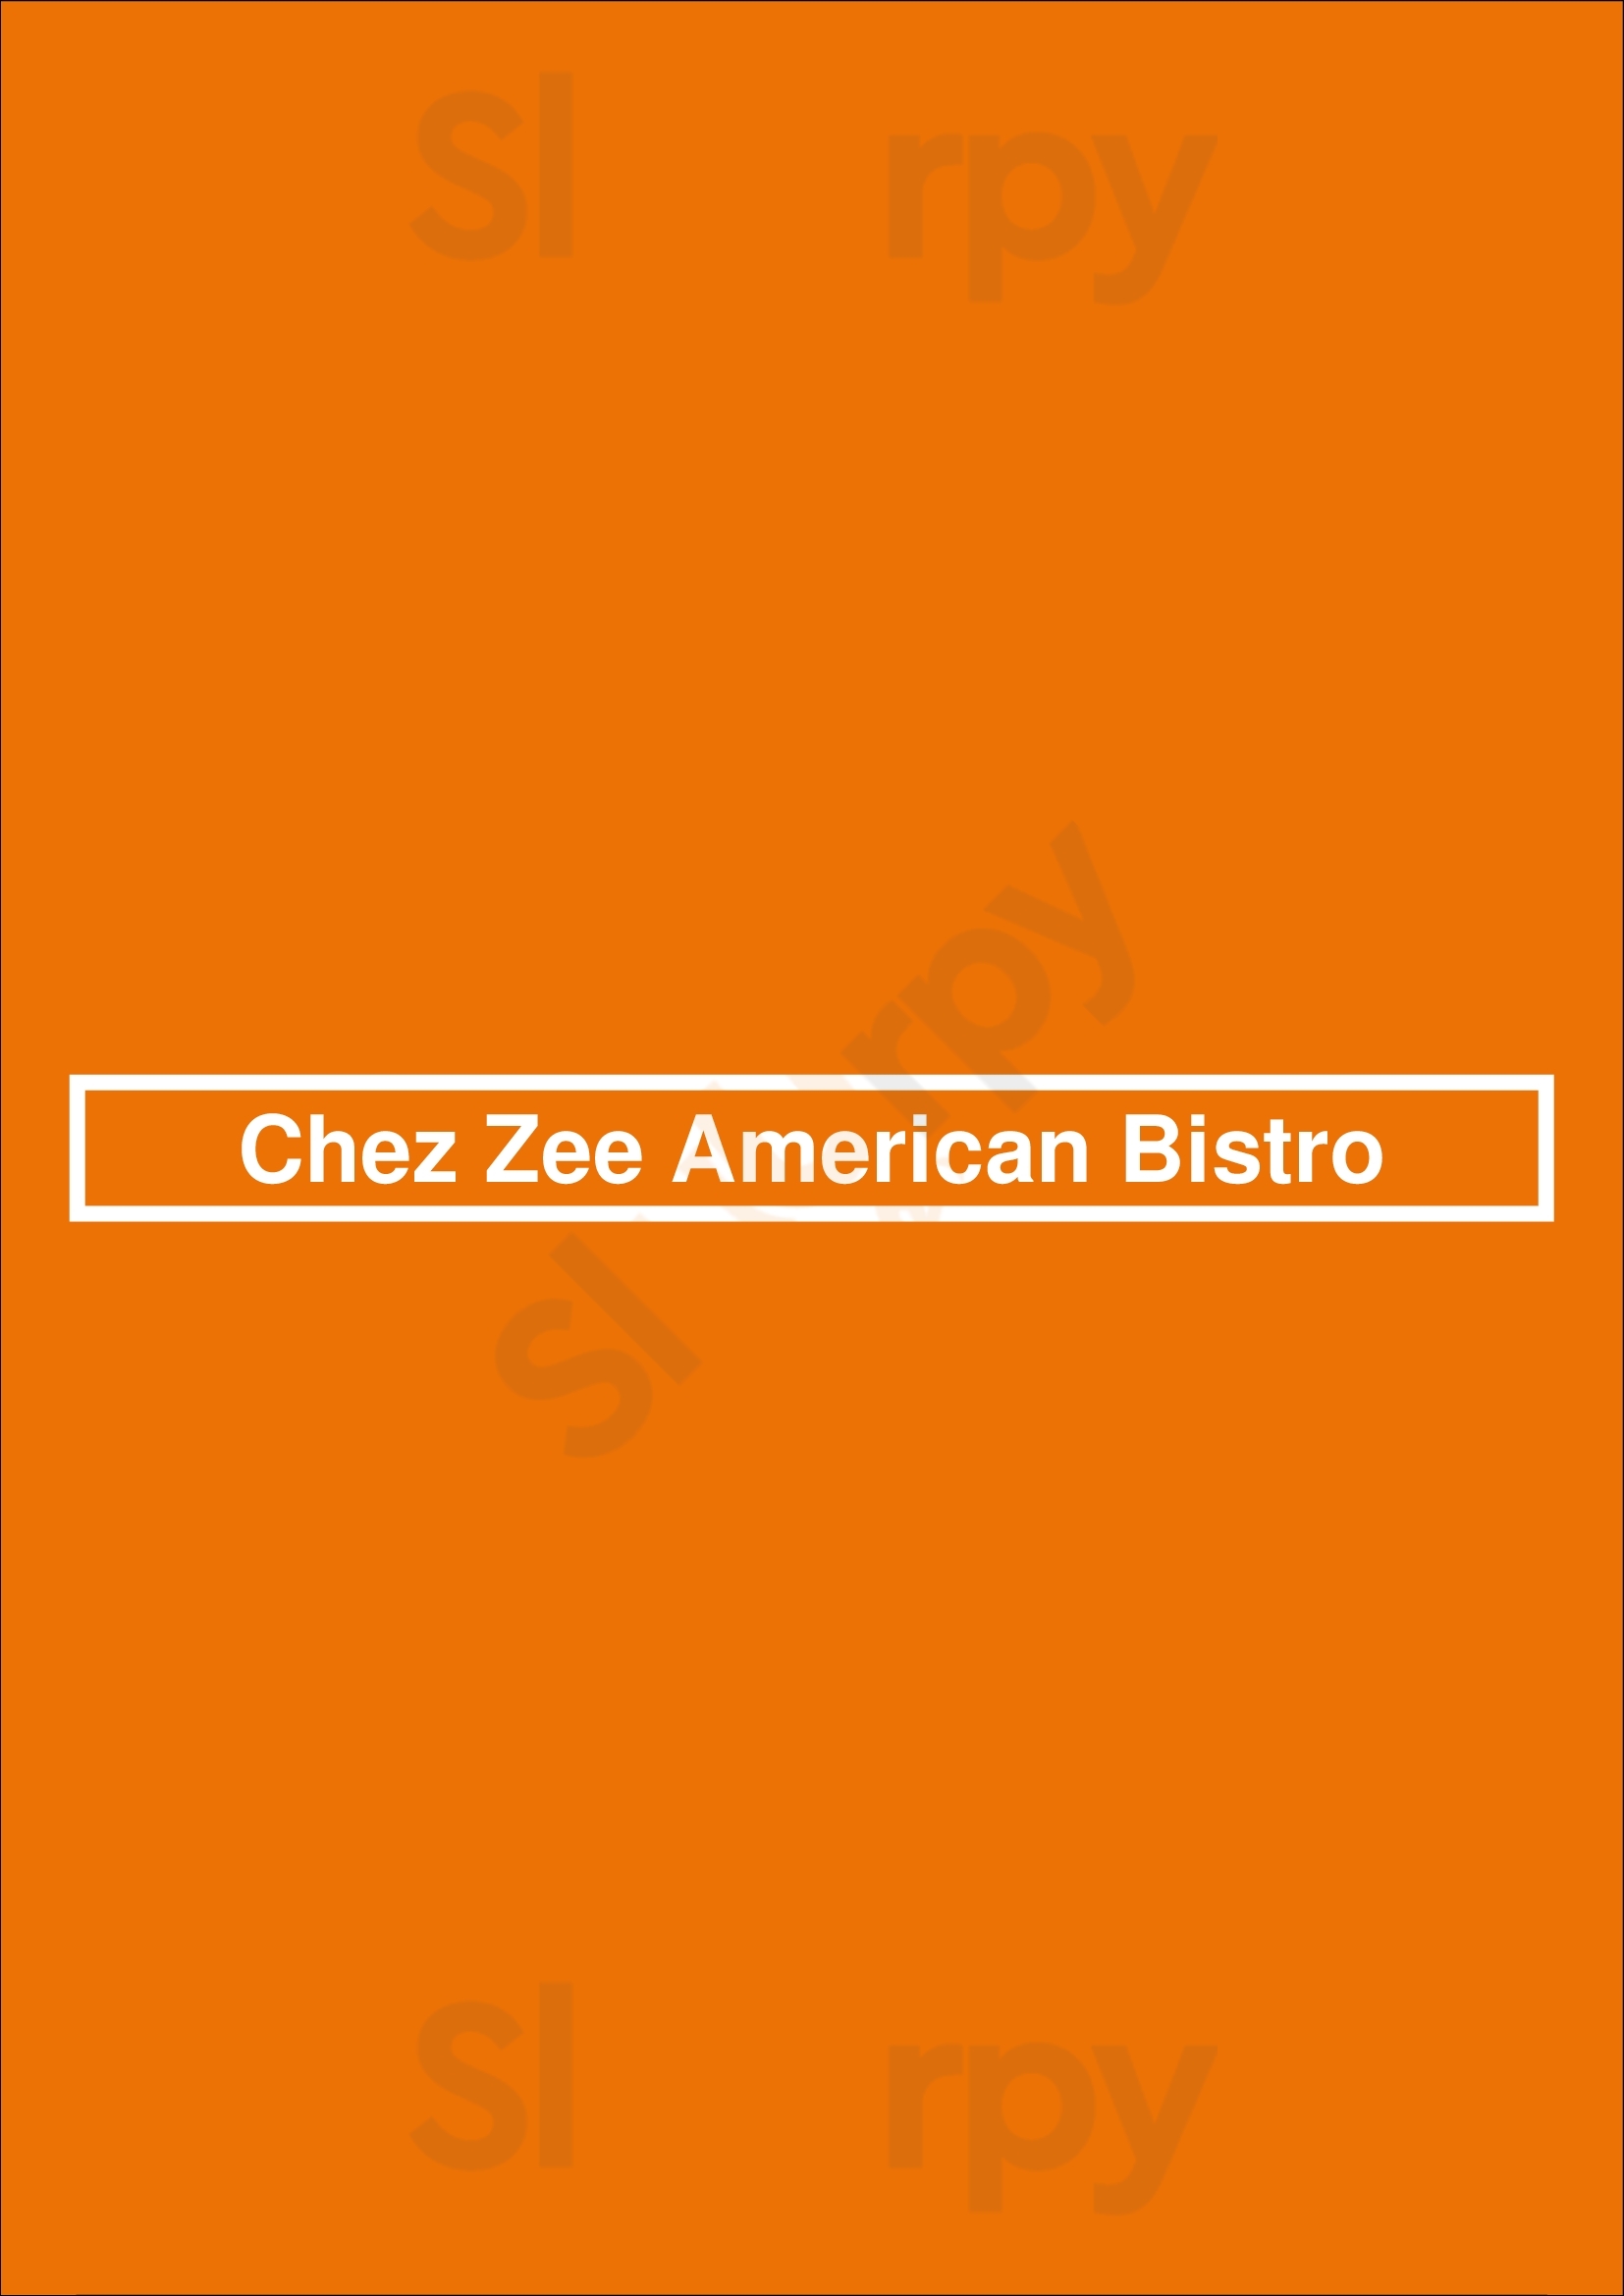 Chez Zee American Bistro Austin Menu - 1